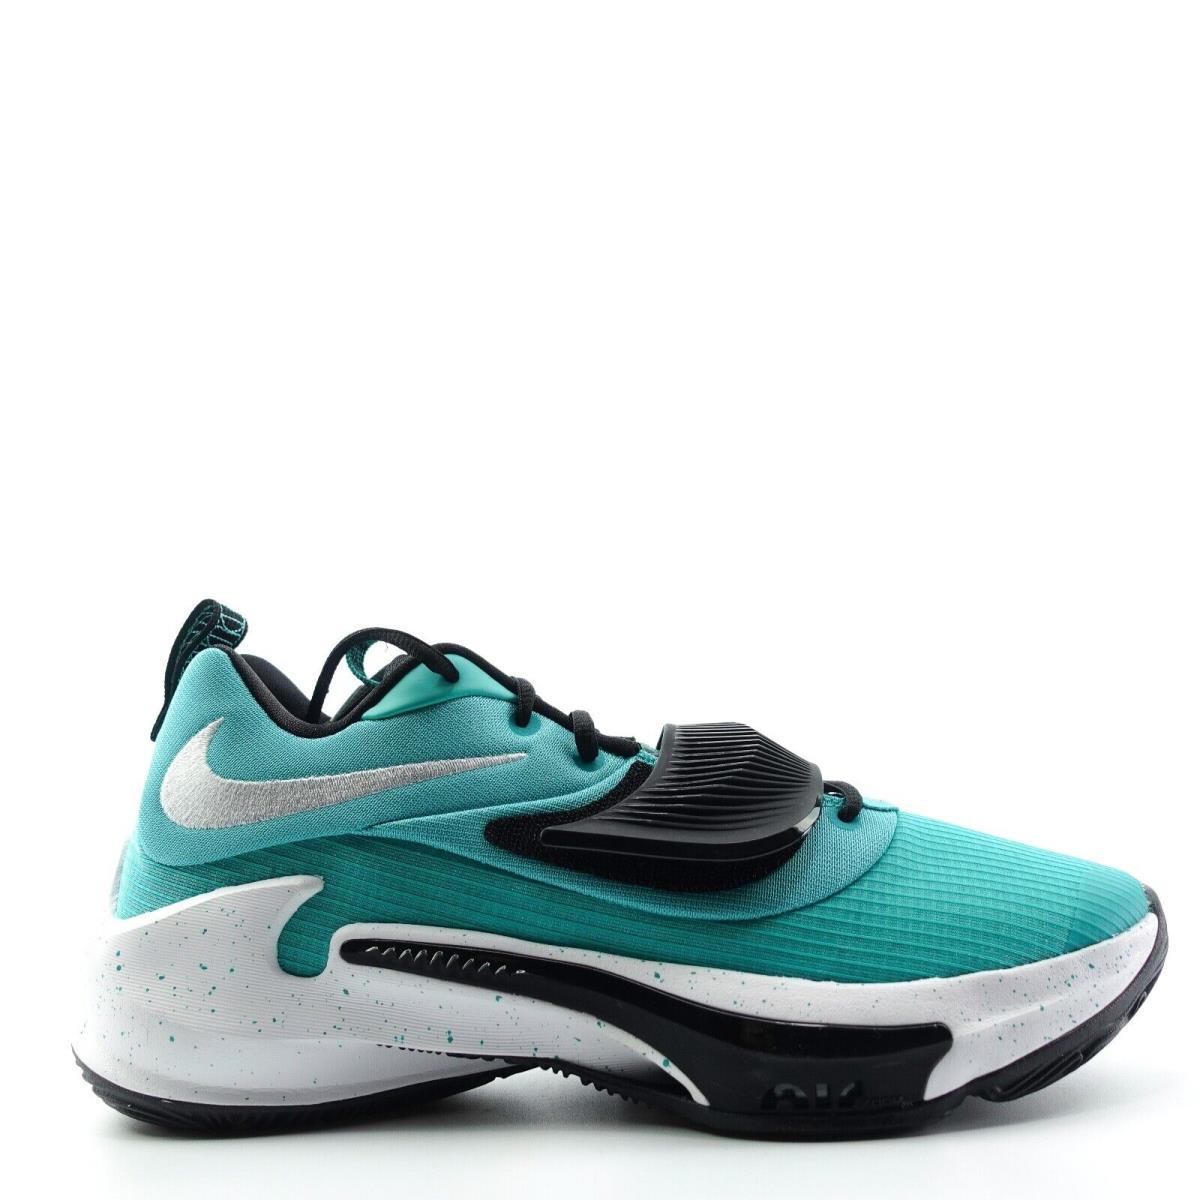 Nike Zoom Freak 3 Mens Size 10 Teal Jade Basketball Shoes DA7845-300